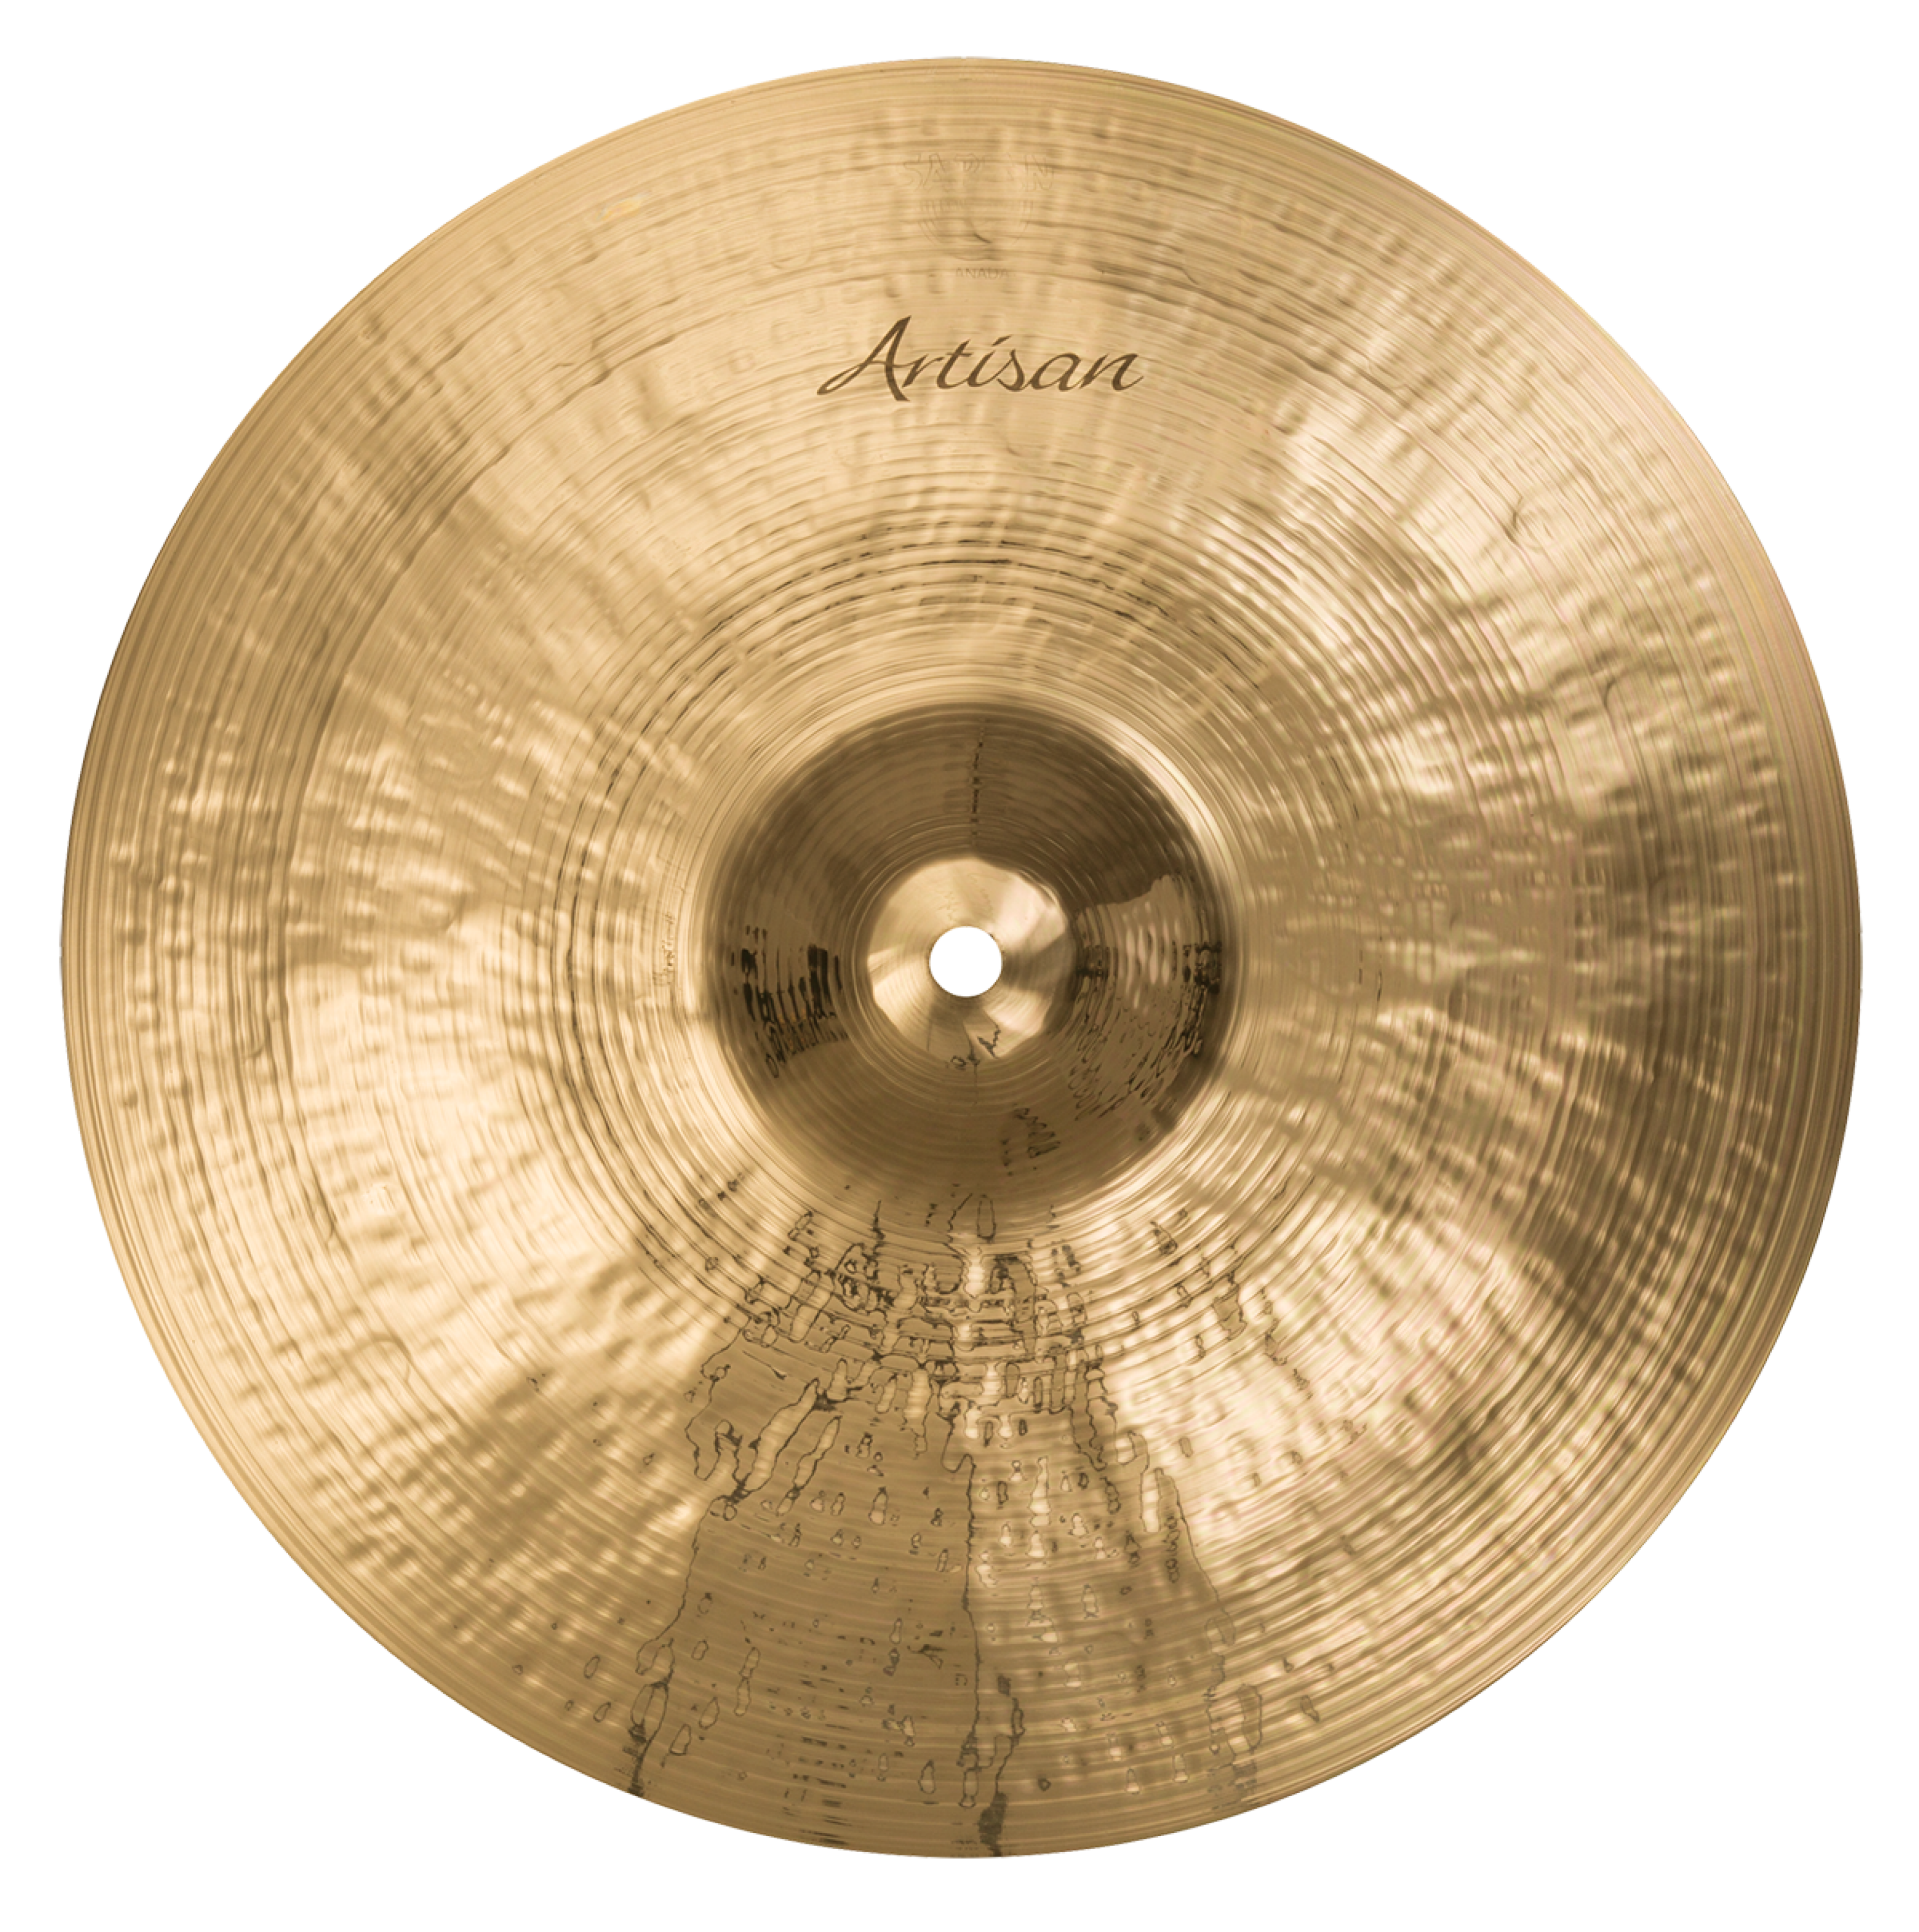 Sabian 14 inch Artisan Light Hi-hat Cymbals - Brilliant Finish